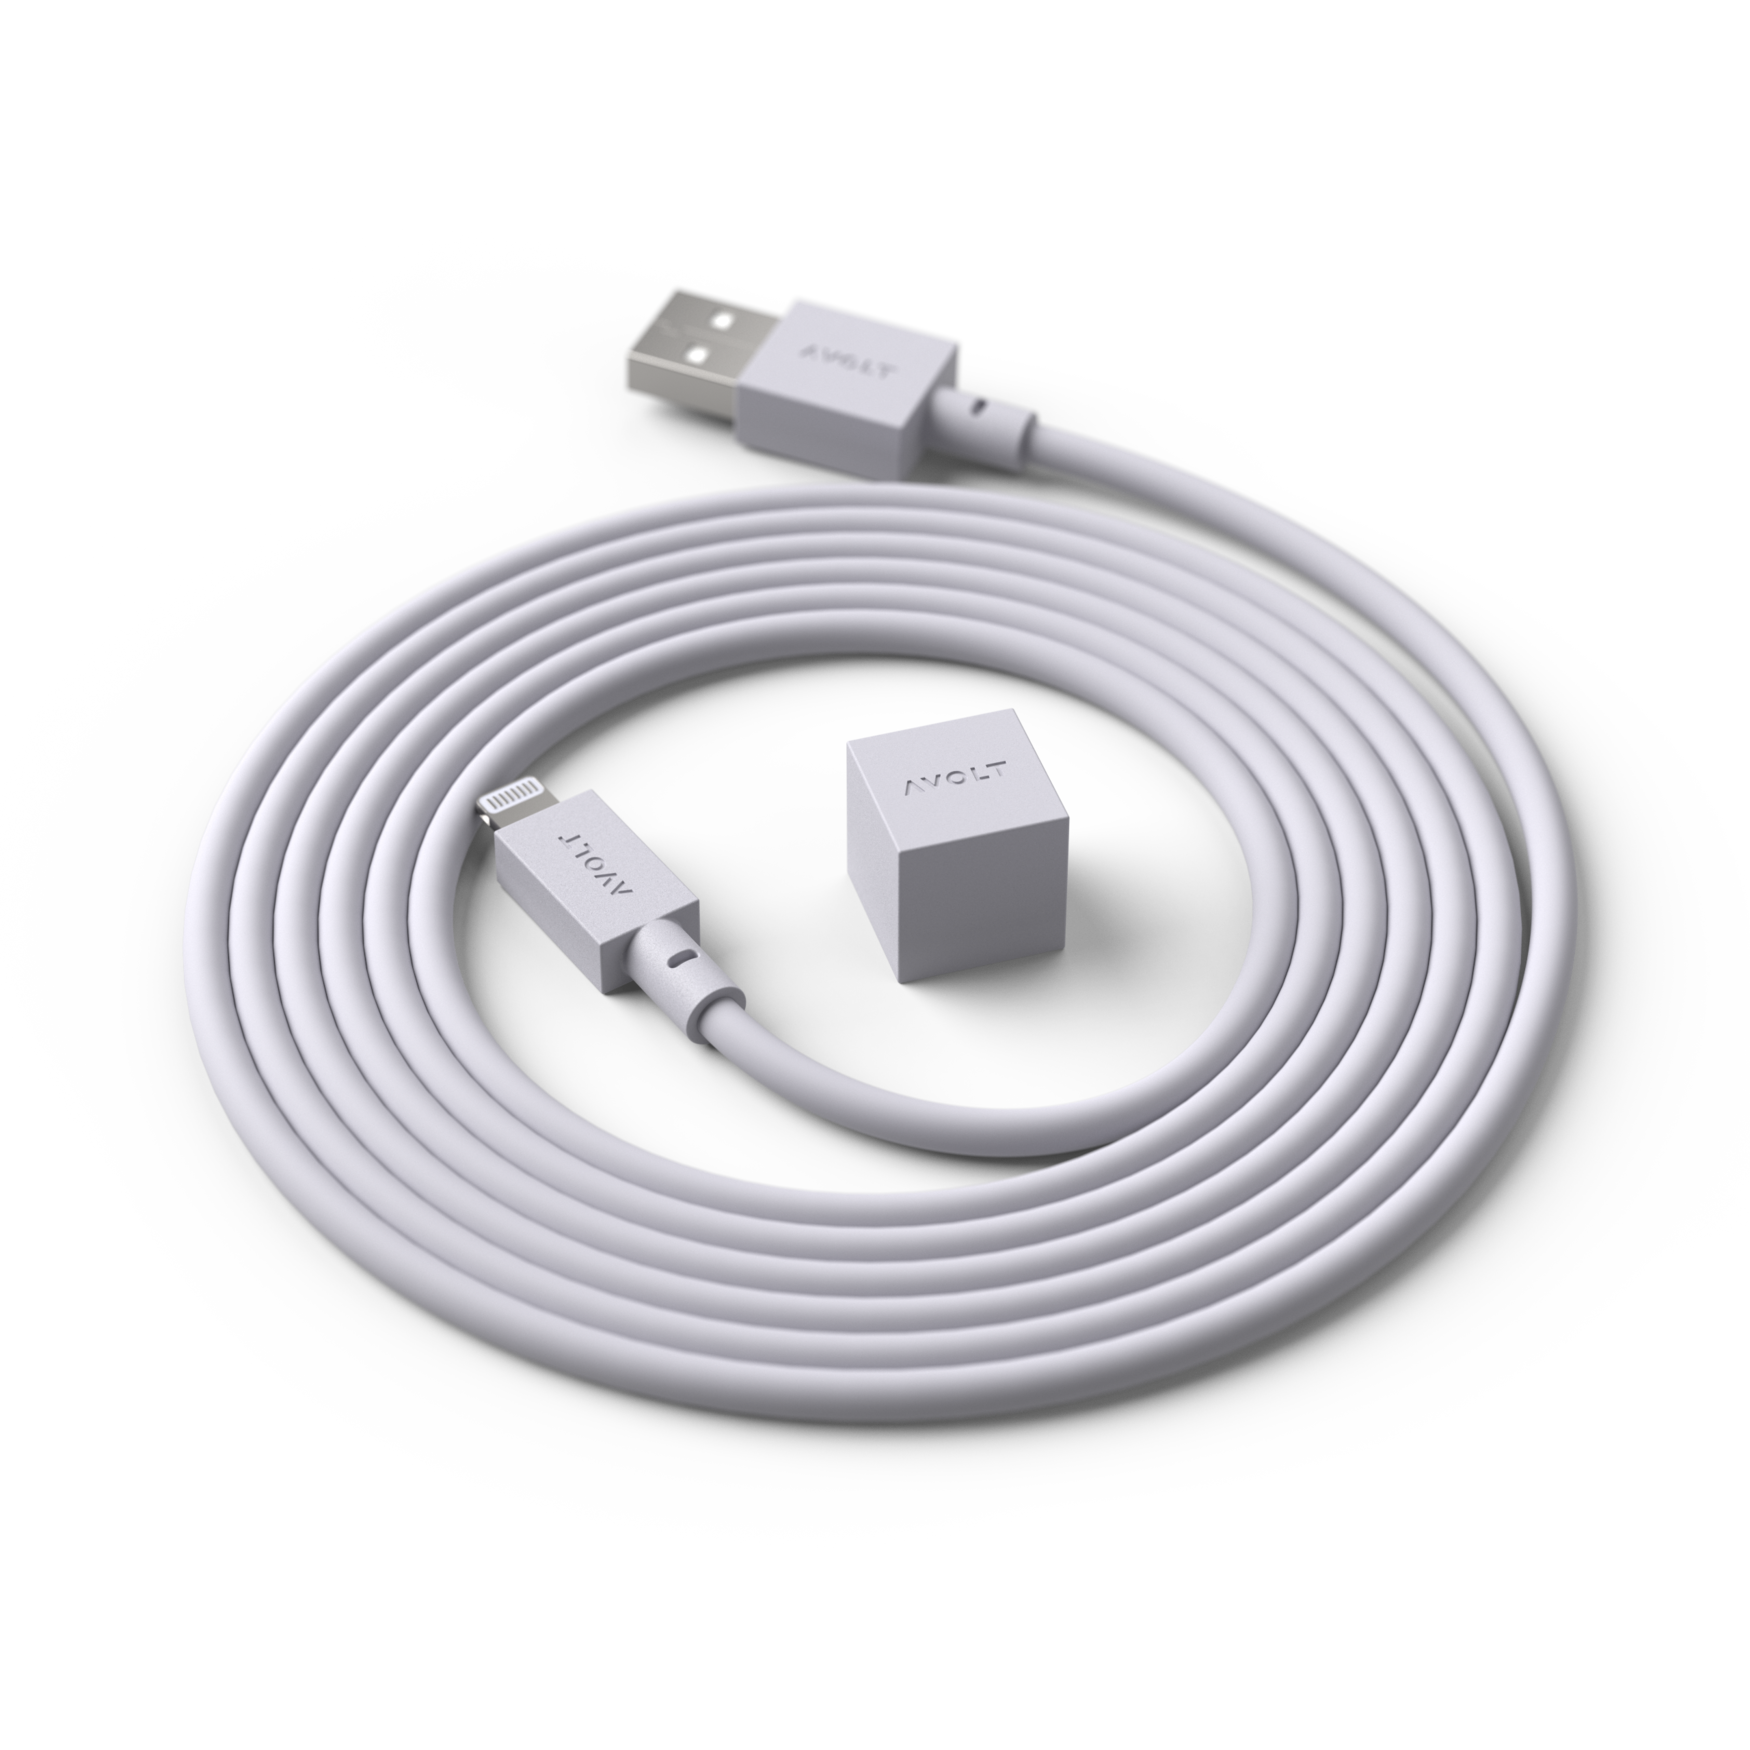 Cable 1 USB-A Gotland grey